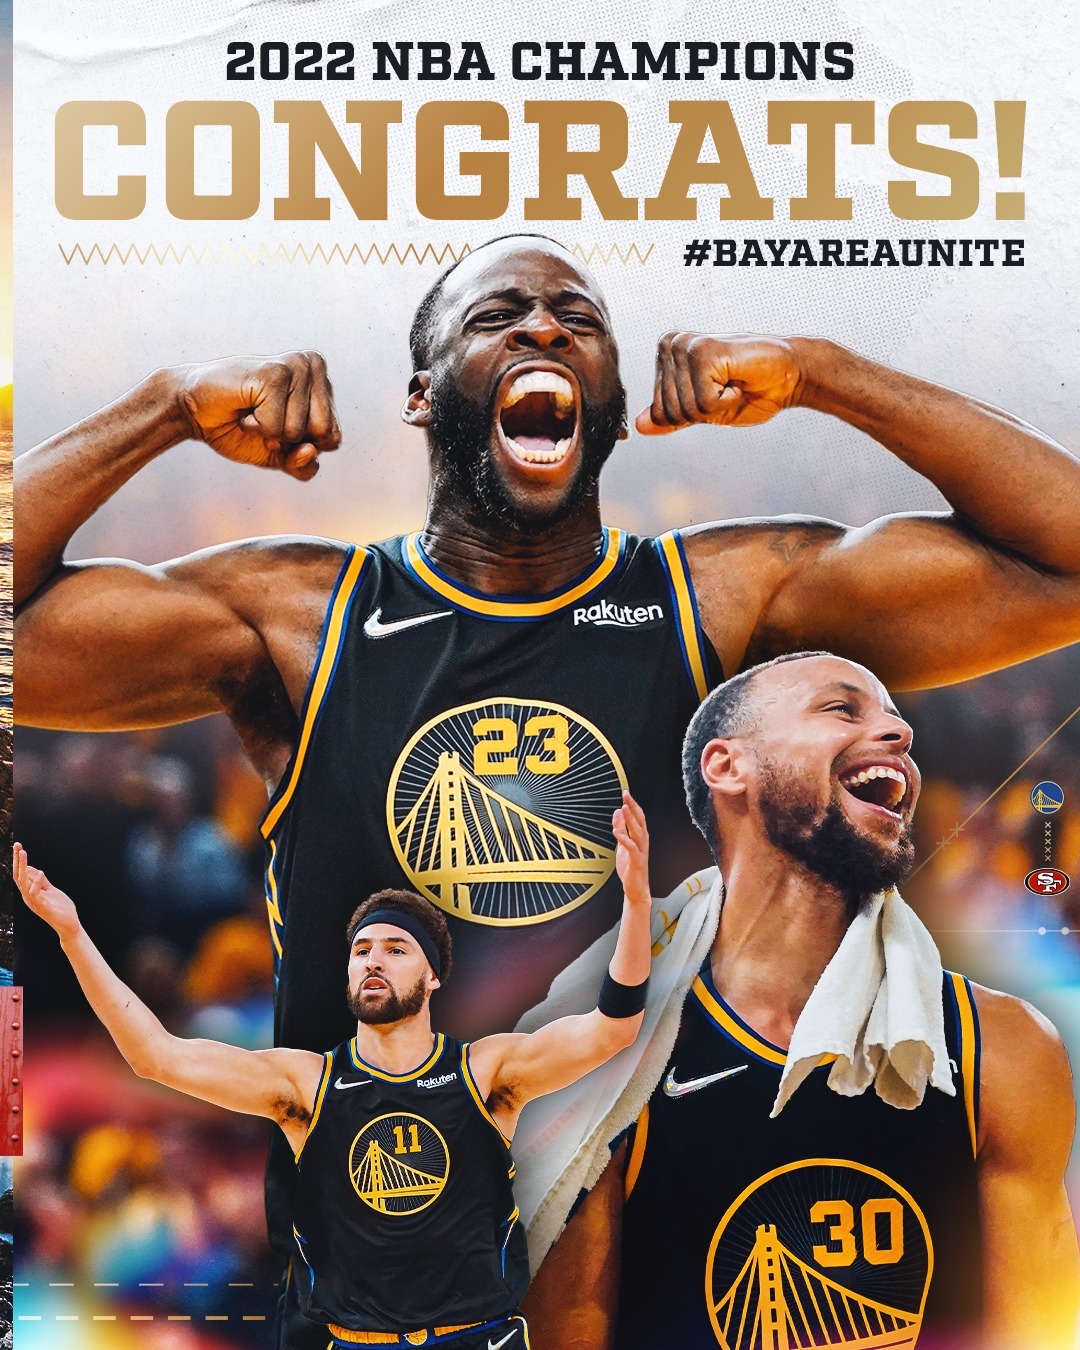 Congratulations to the 2022 NBA Champs!  #GoldBlooded #BayAreaUnite...